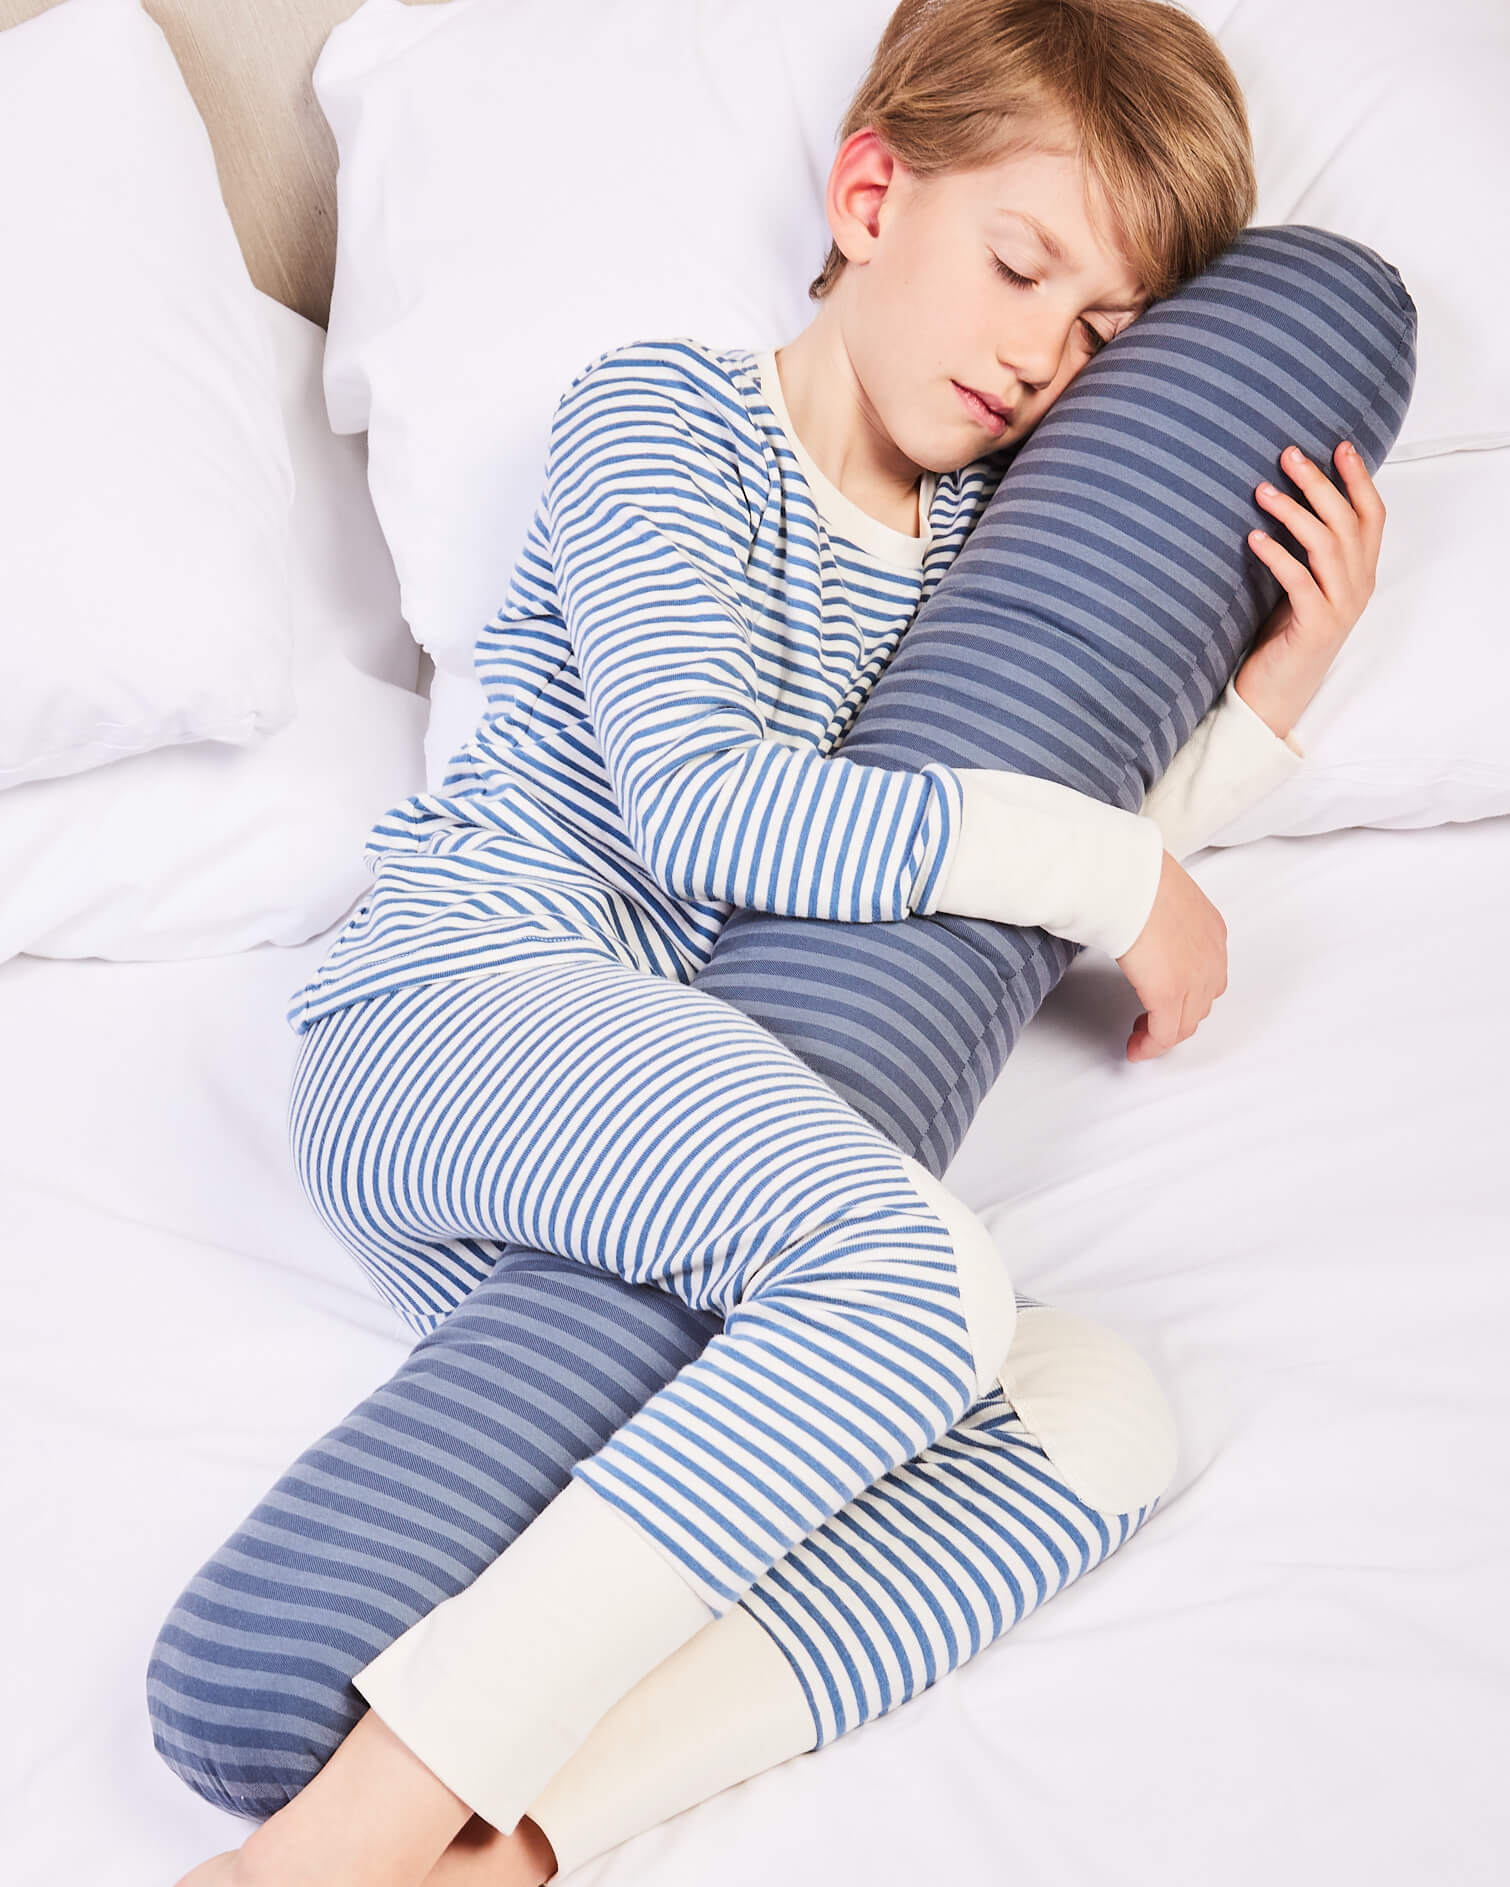 Young boy hugging his navy blue sleeping pillow